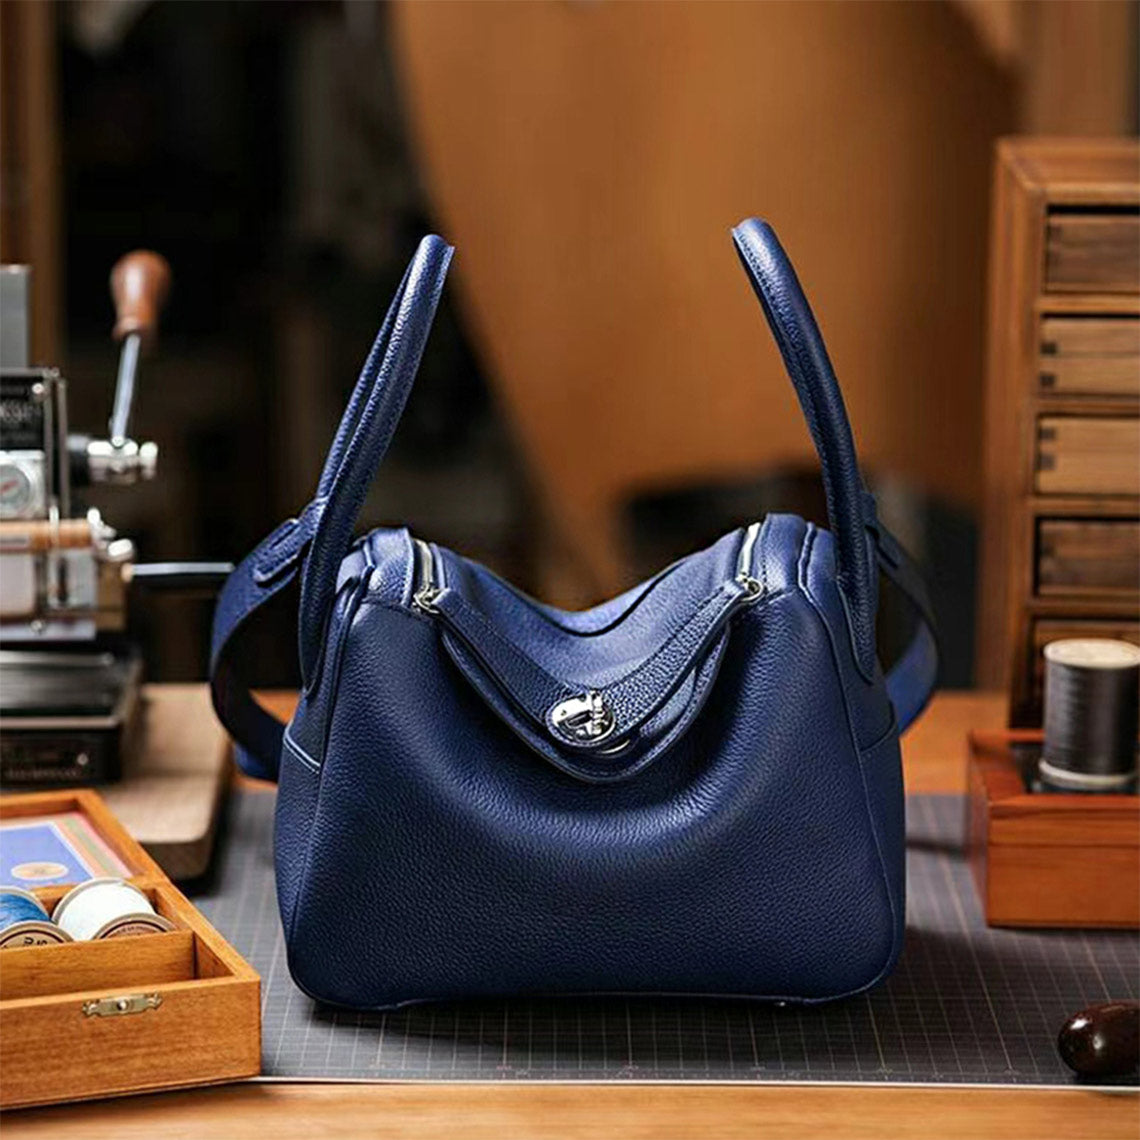 Top Grain Leather Fashion Lindi Handbag DIY Kit | Select 25% Off Coupon in Cart